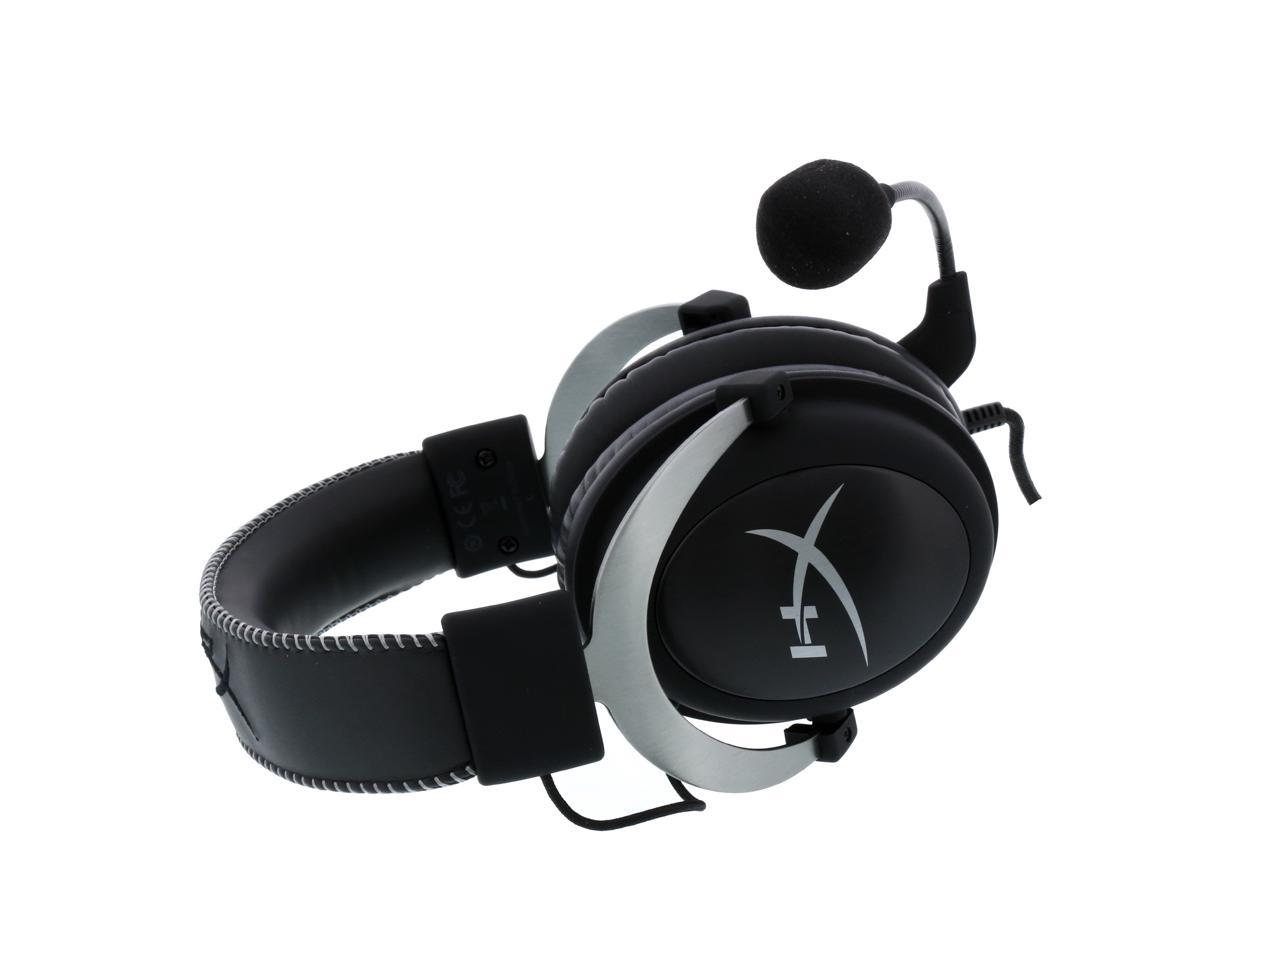 Lauw vrek Acrobatiek HyperX Cloud II Gaming Headset - 7.1 Virtual Surround Sound - Gun Metal -  Newegg.com